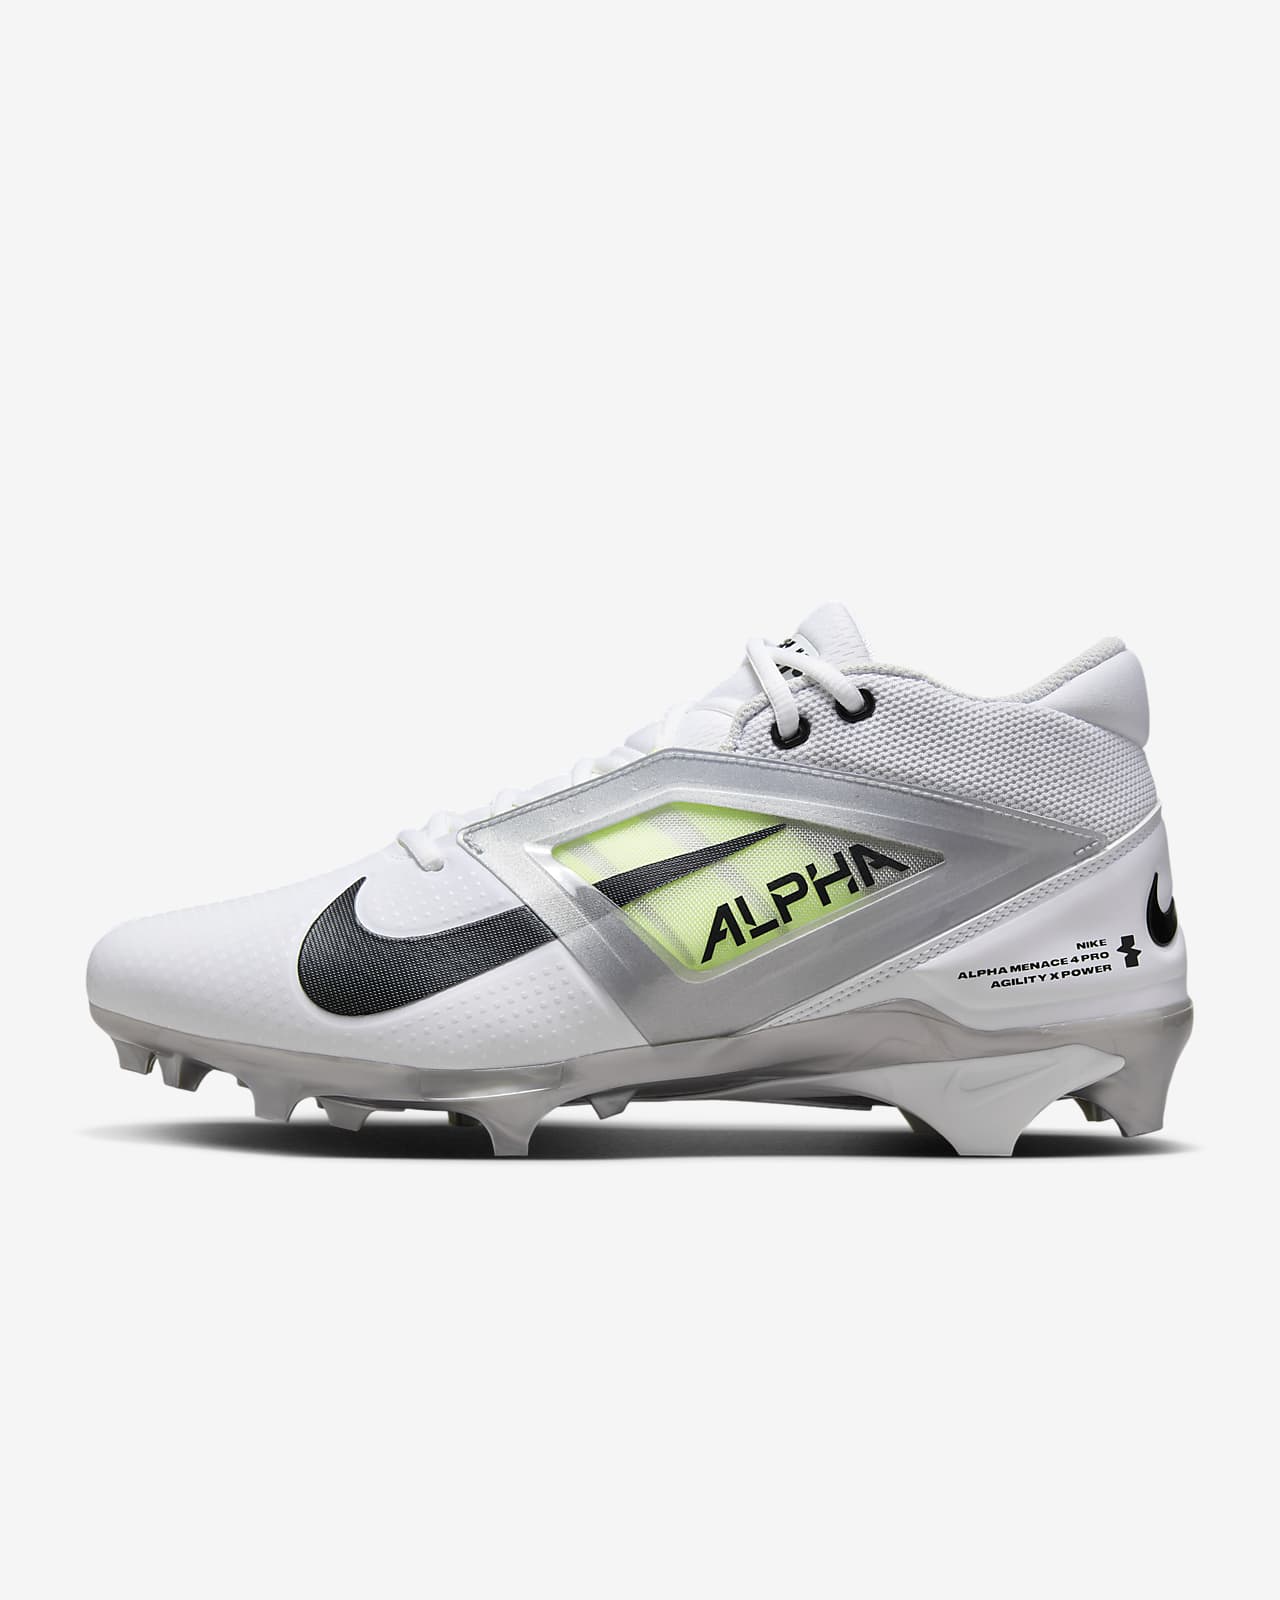 Calzado de fútbol americano Nike Alpha Menace Pro 4